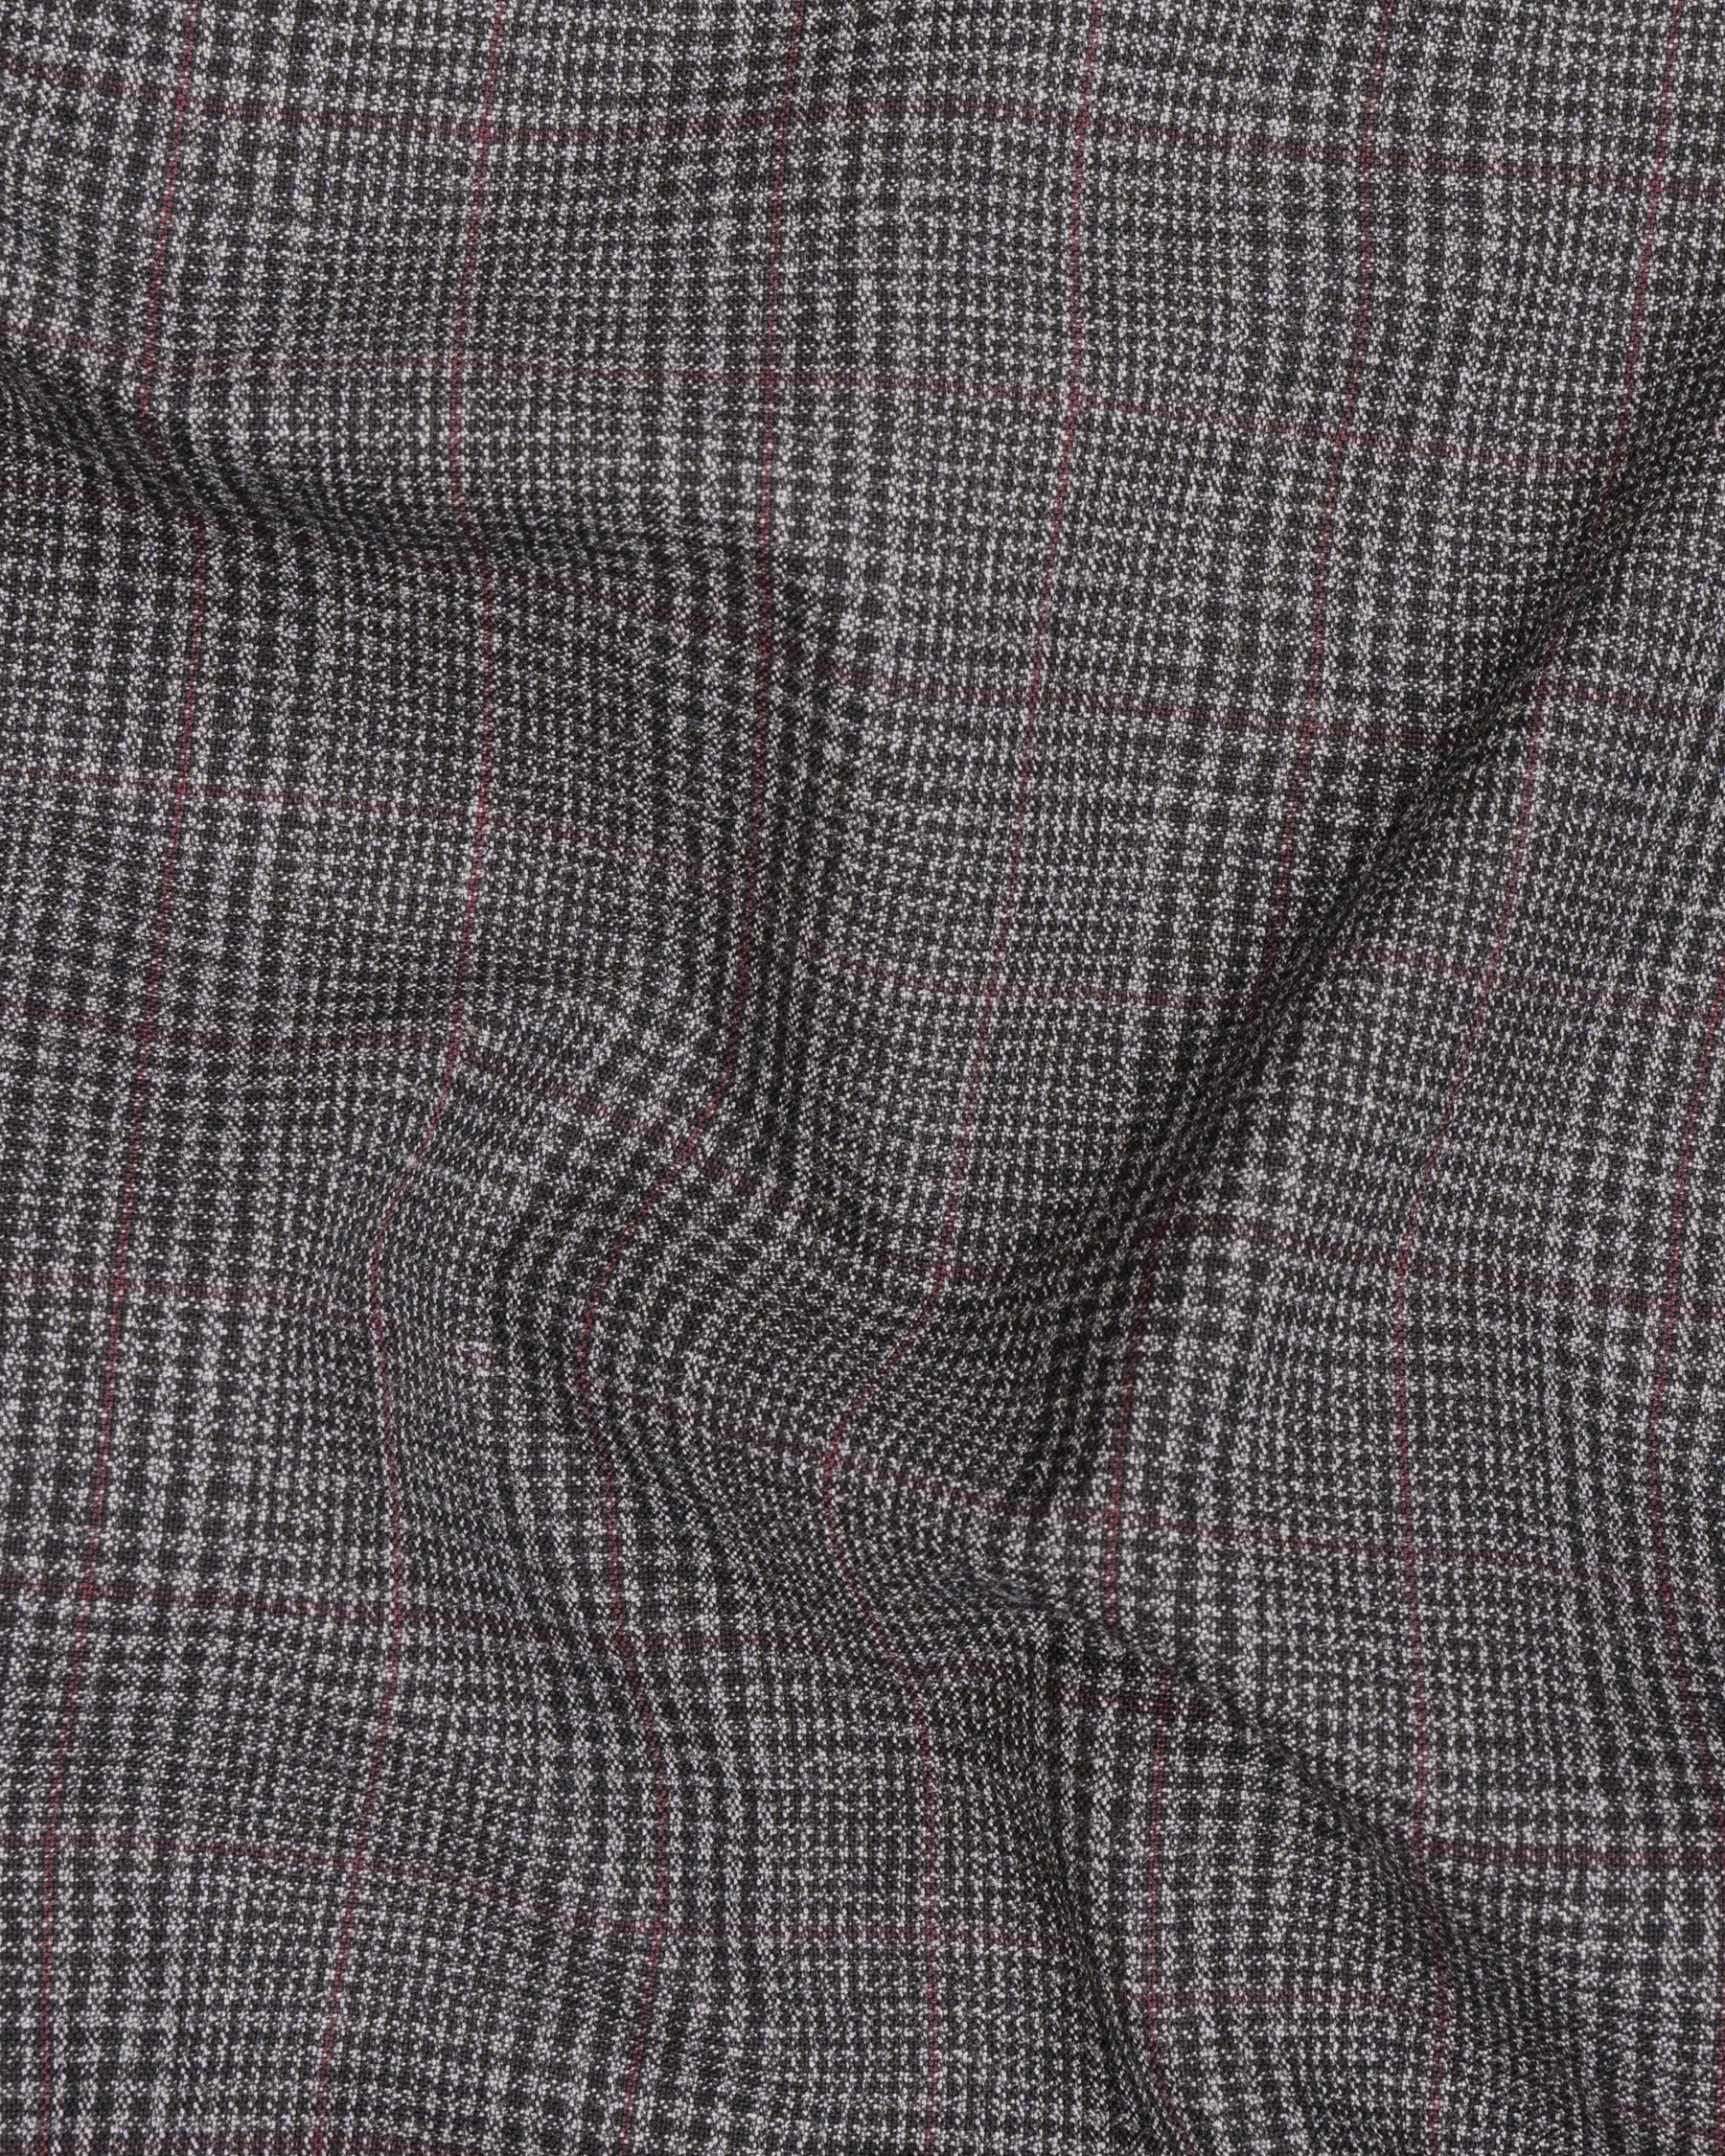 Scorpion Grey Subtle Plaid Wool Rich Waistcoat V1365-36, V1365-38, V1365-40, V1365-42, V1365-44, V1365-46, V1365-48, V1365-50, V1365-52, V1365-54, V1365-56, V1365-58, V1365-60